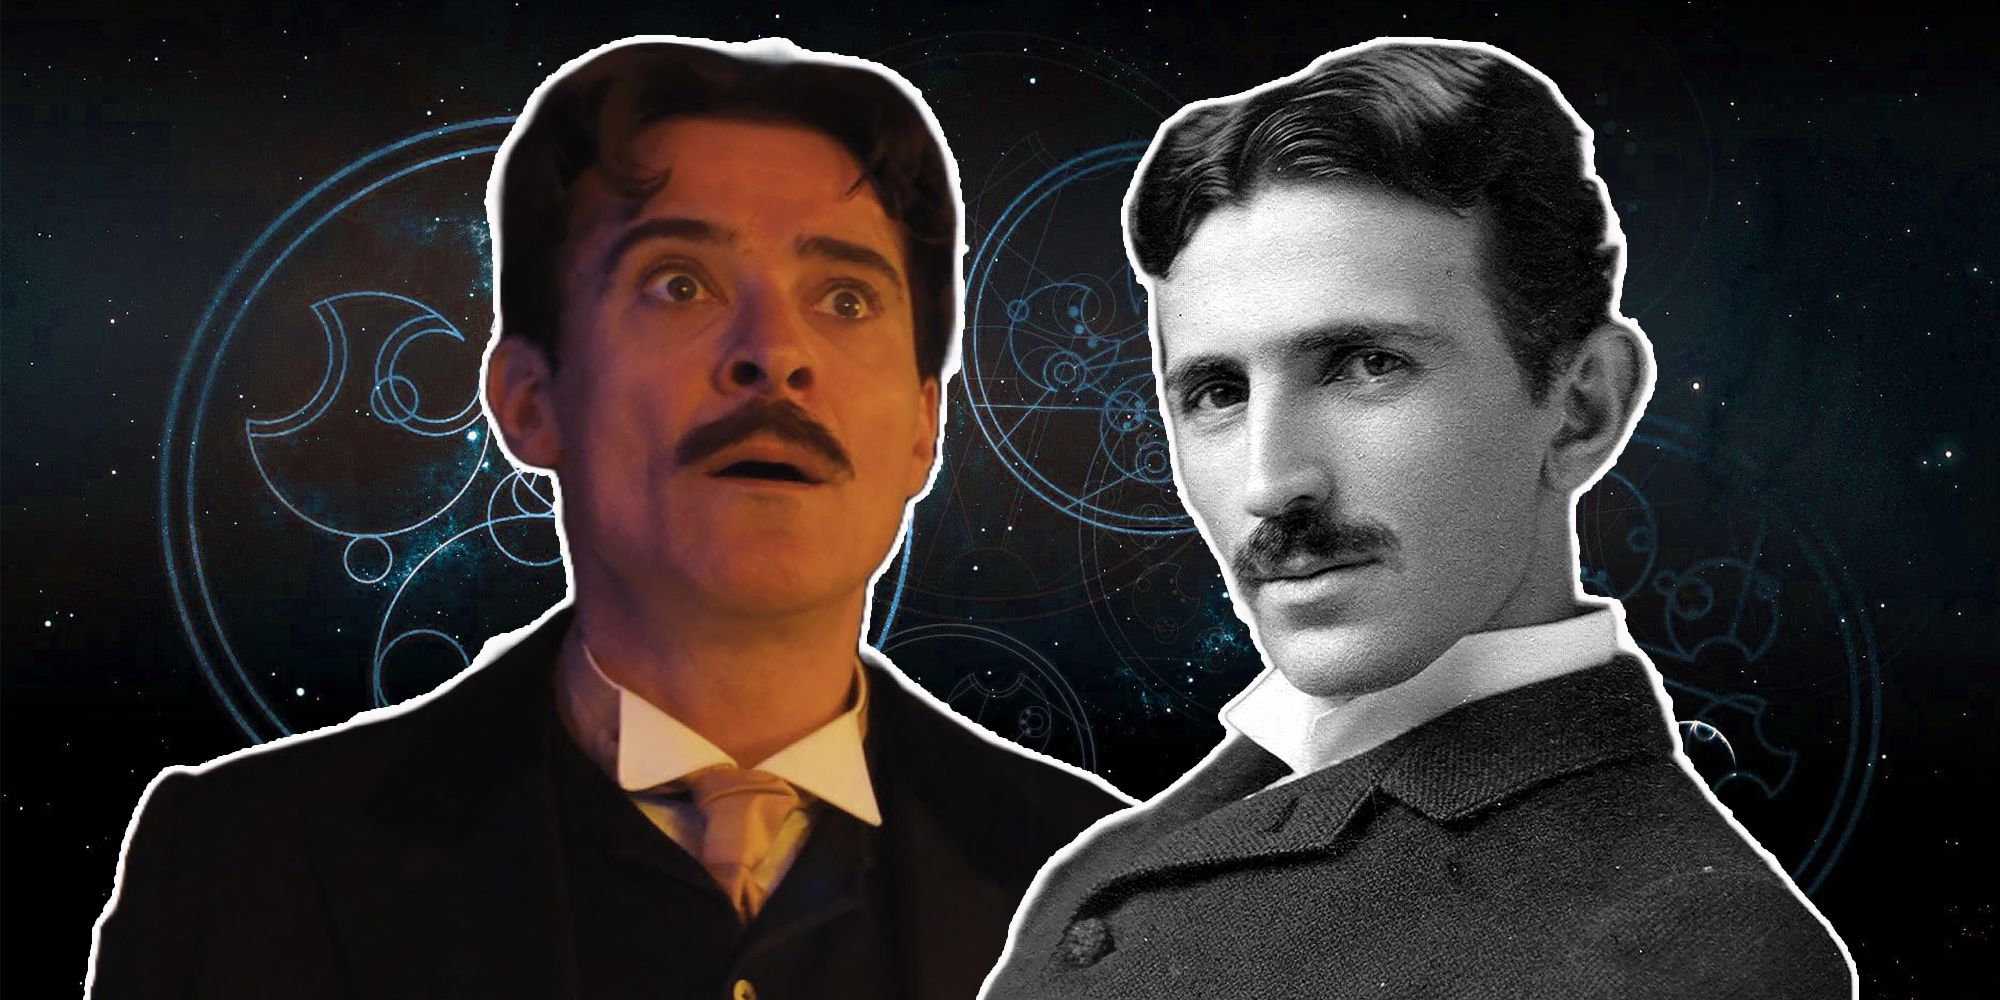 Nikola Tesla (Goran Višnjić) was wanted by an alien race for his brilliant mind